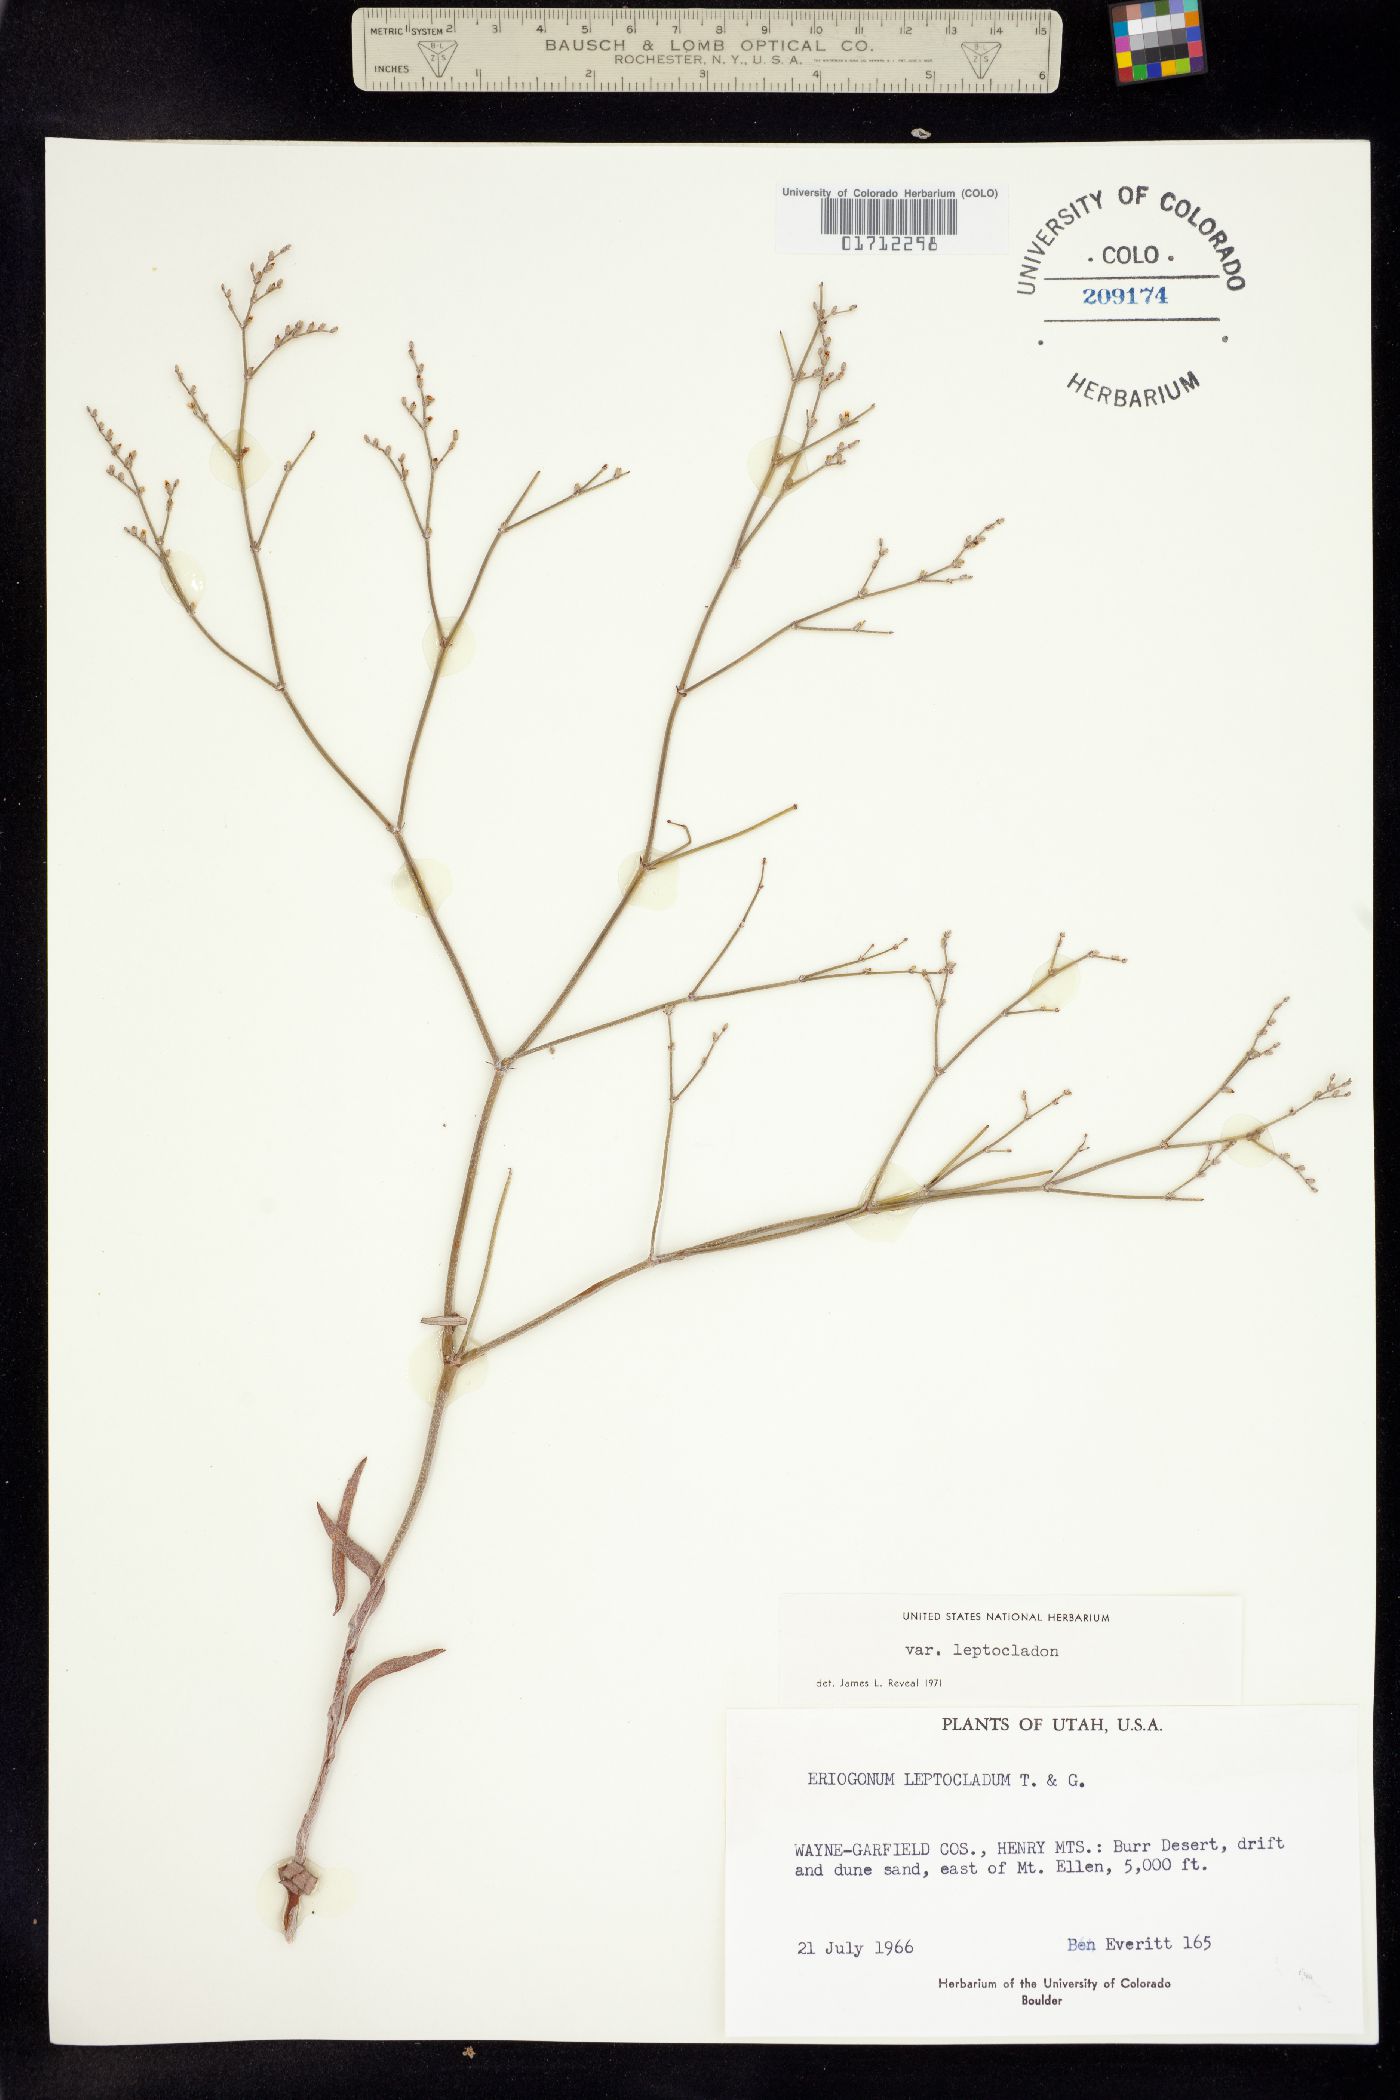 Eriogonum leptocladon var. leptocladon image